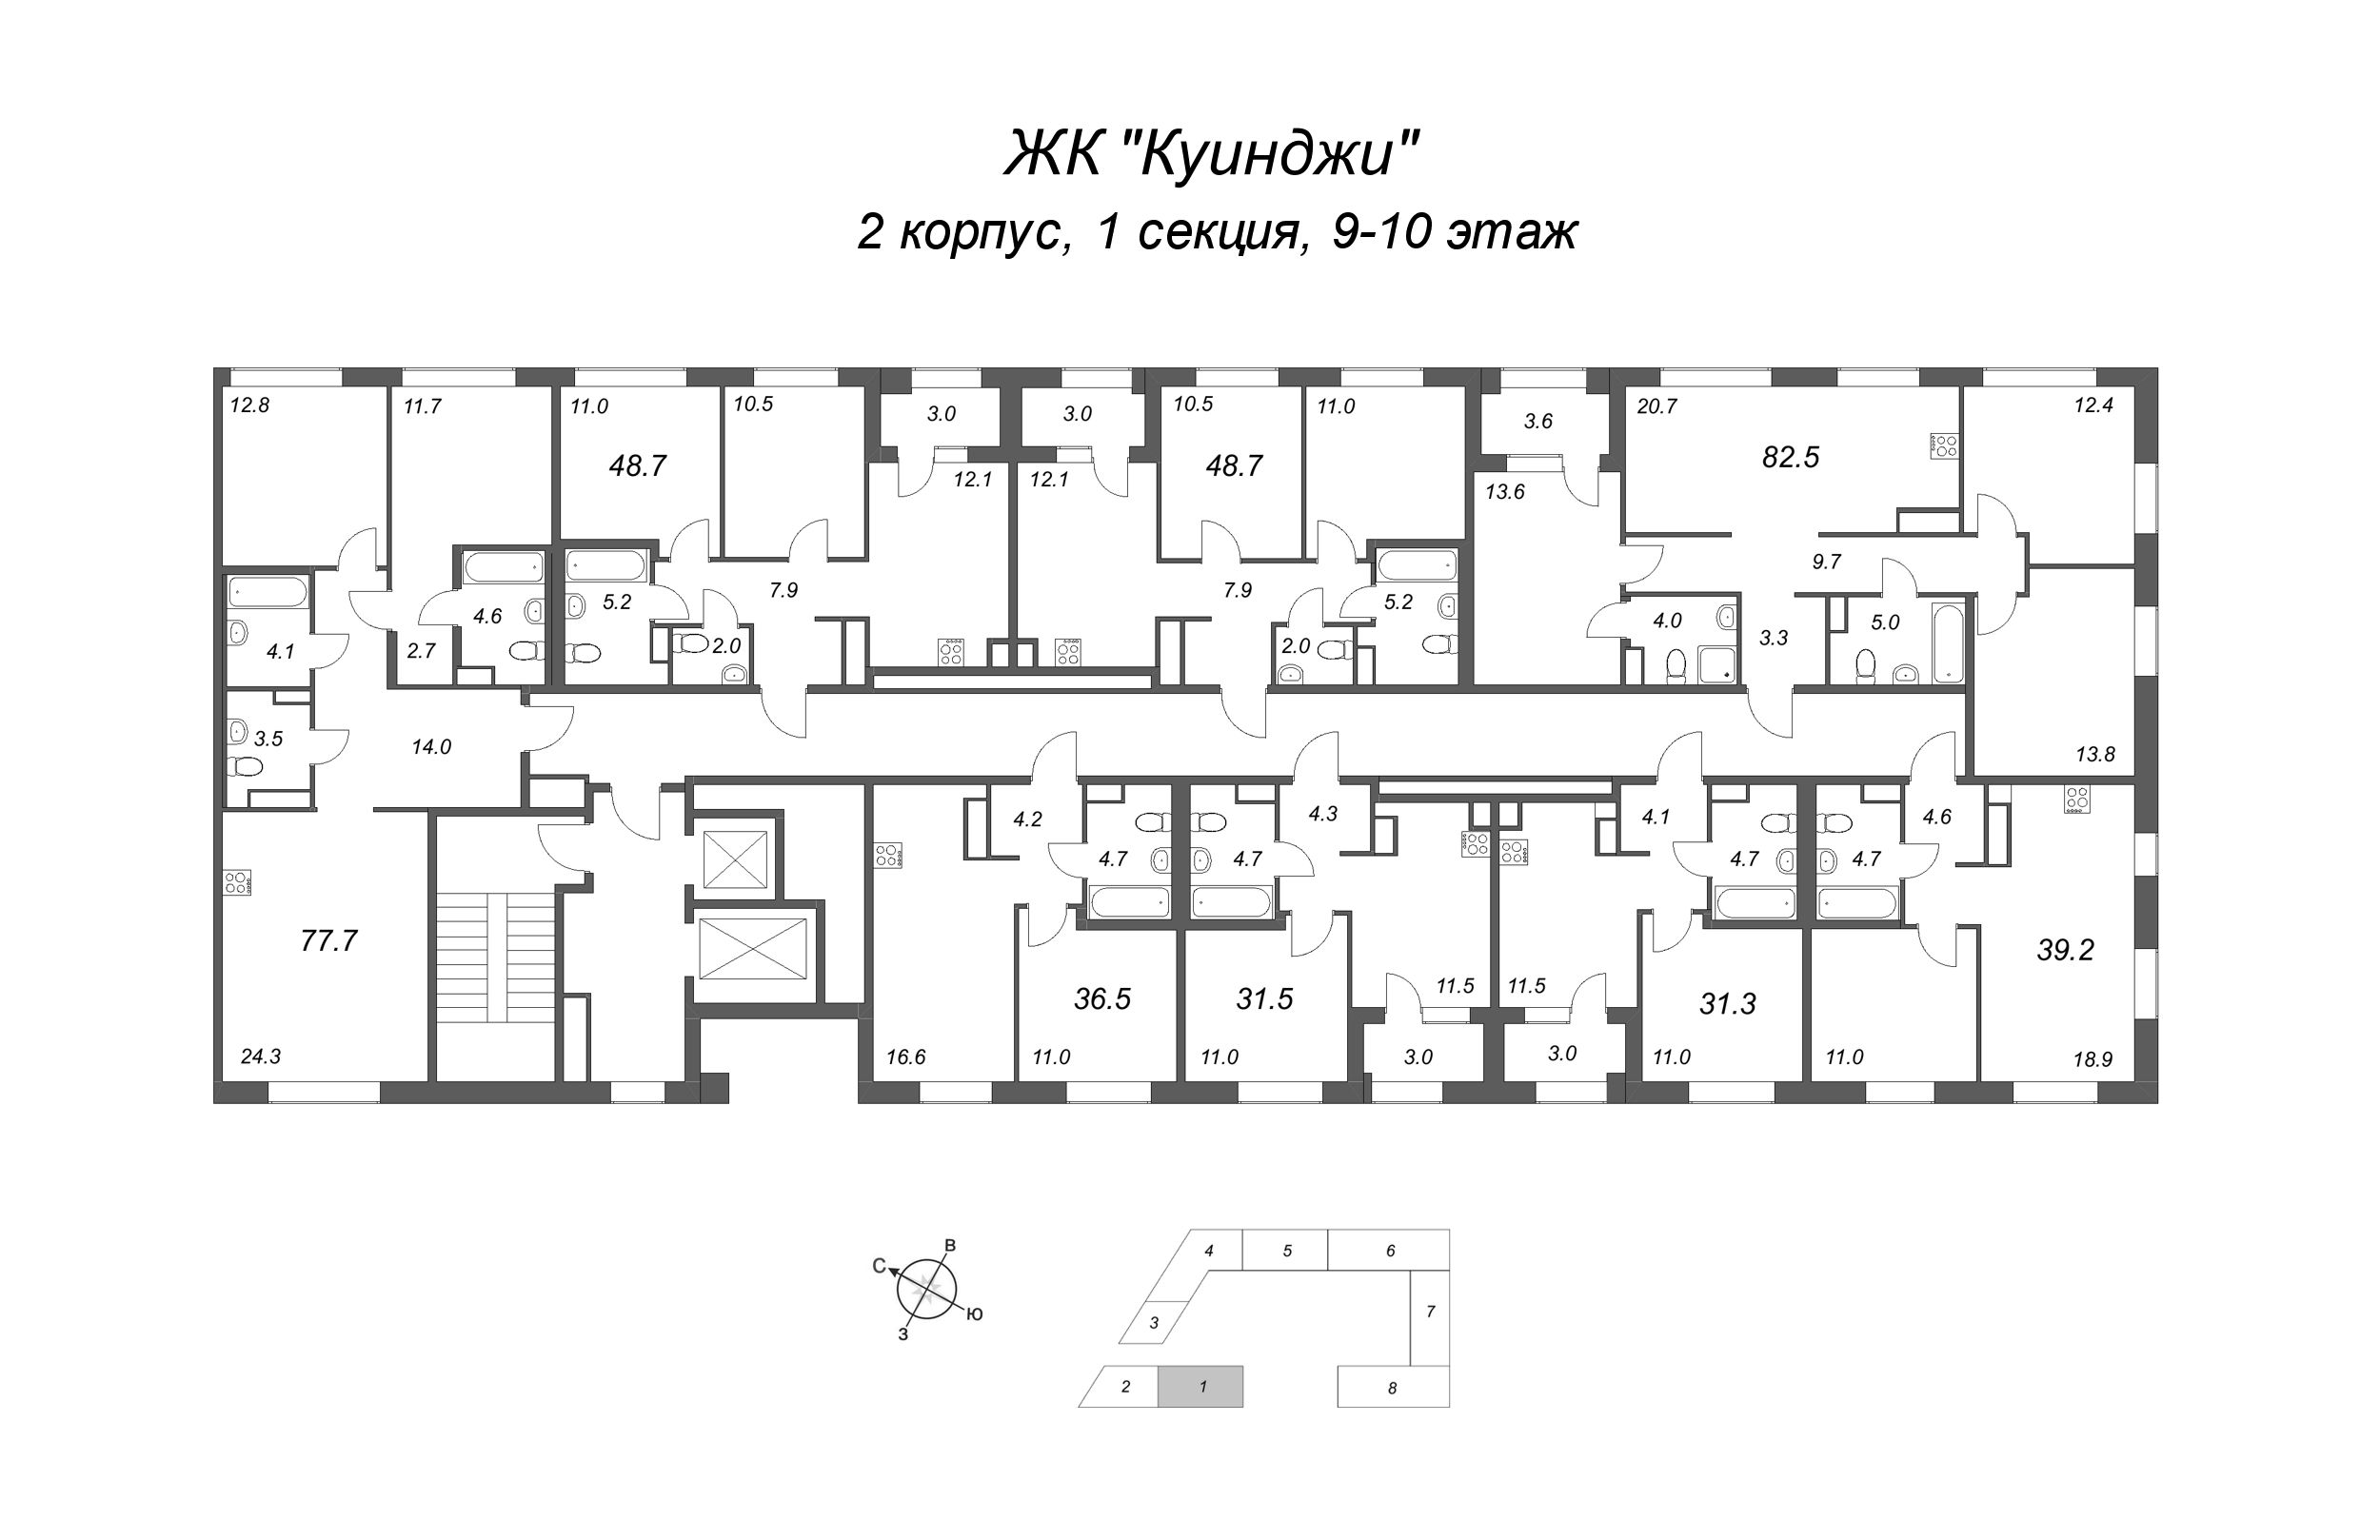 2-комнатная (Евро) квартира, 39.2 м² в ЖК "Куинджи" - планировка этажа